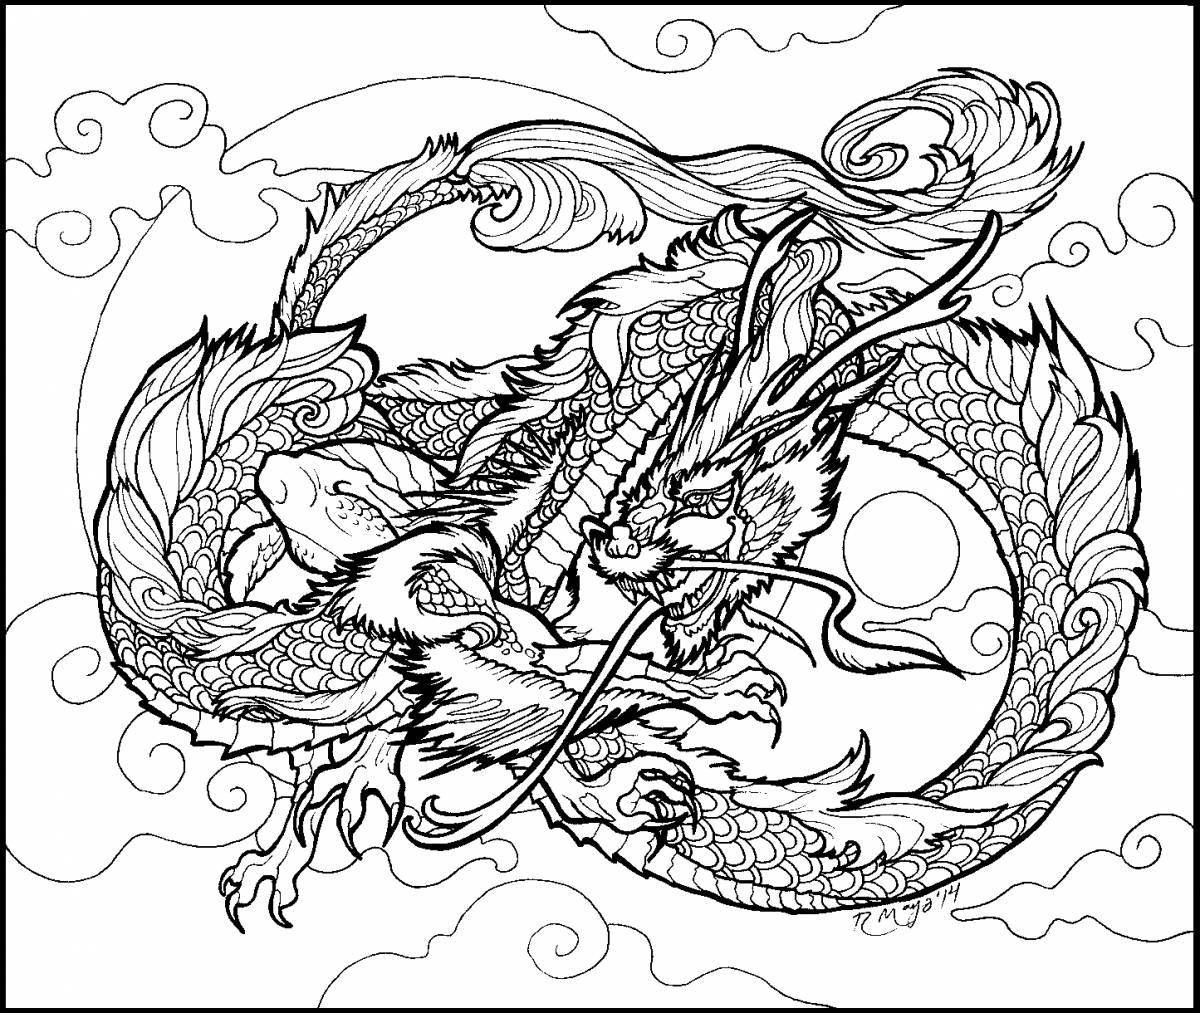 When the dragon dreams majestic coloring page